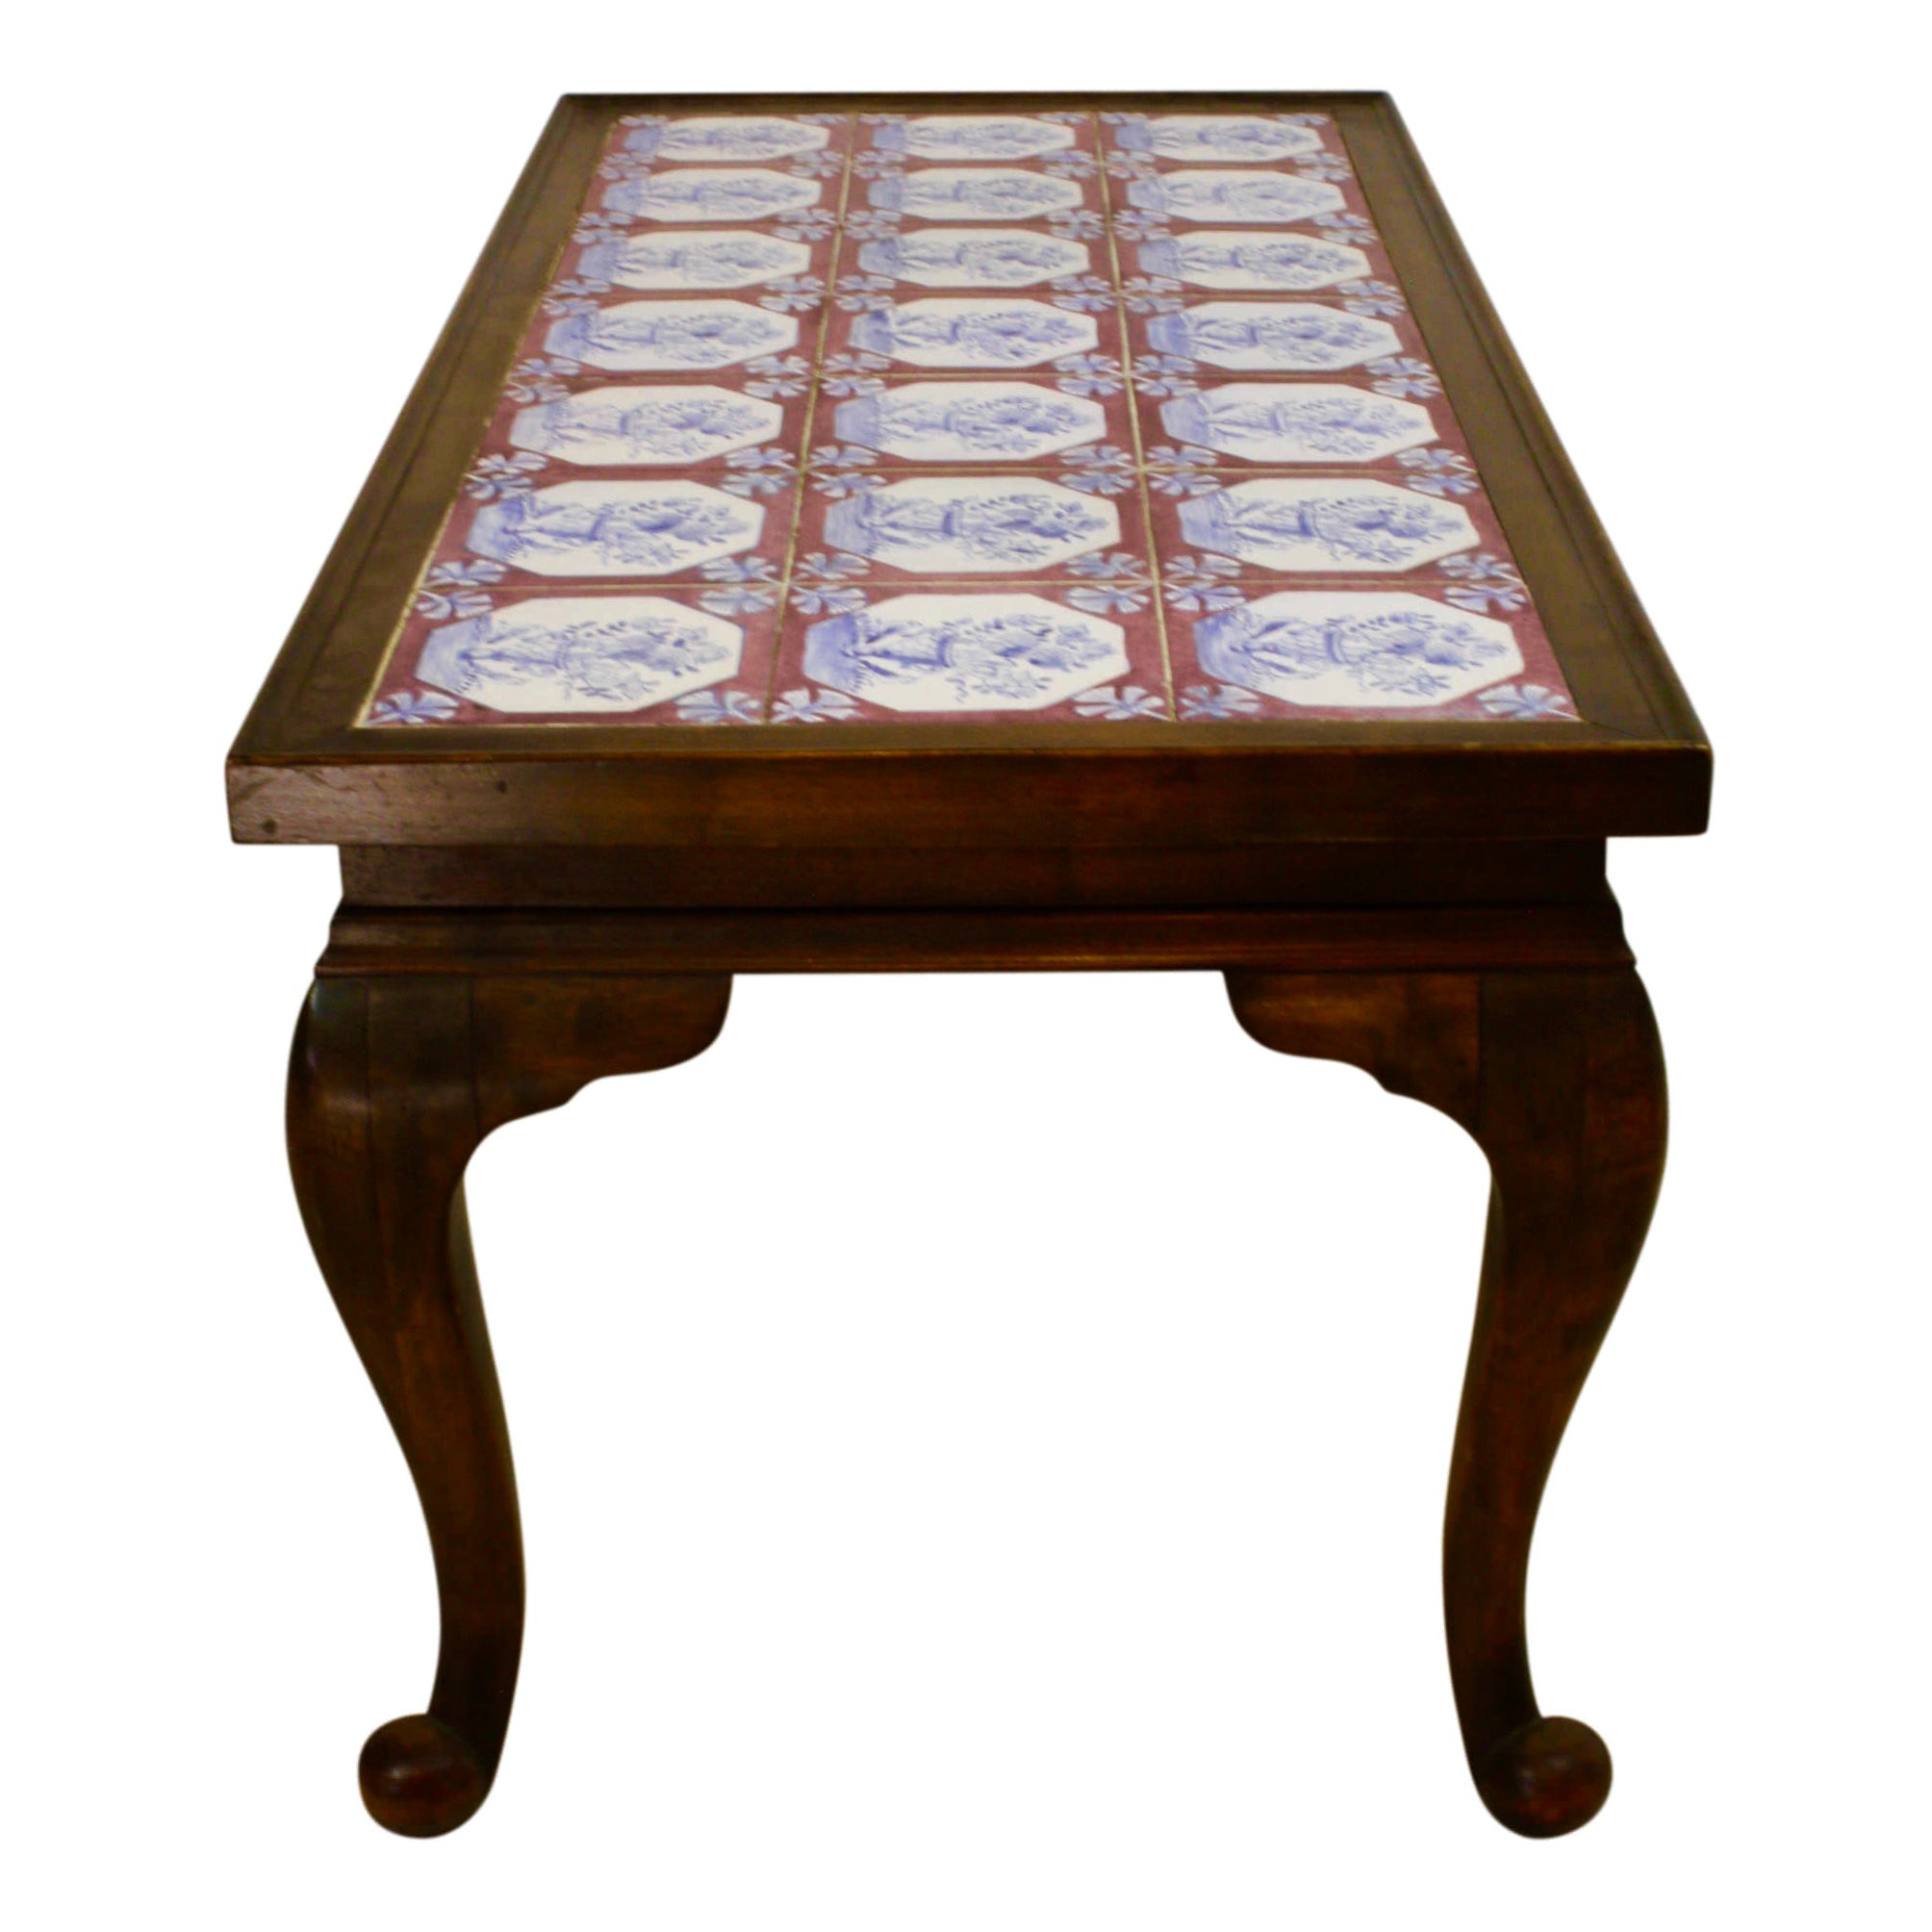 Dutch Walnut Tile Top Coffee Table